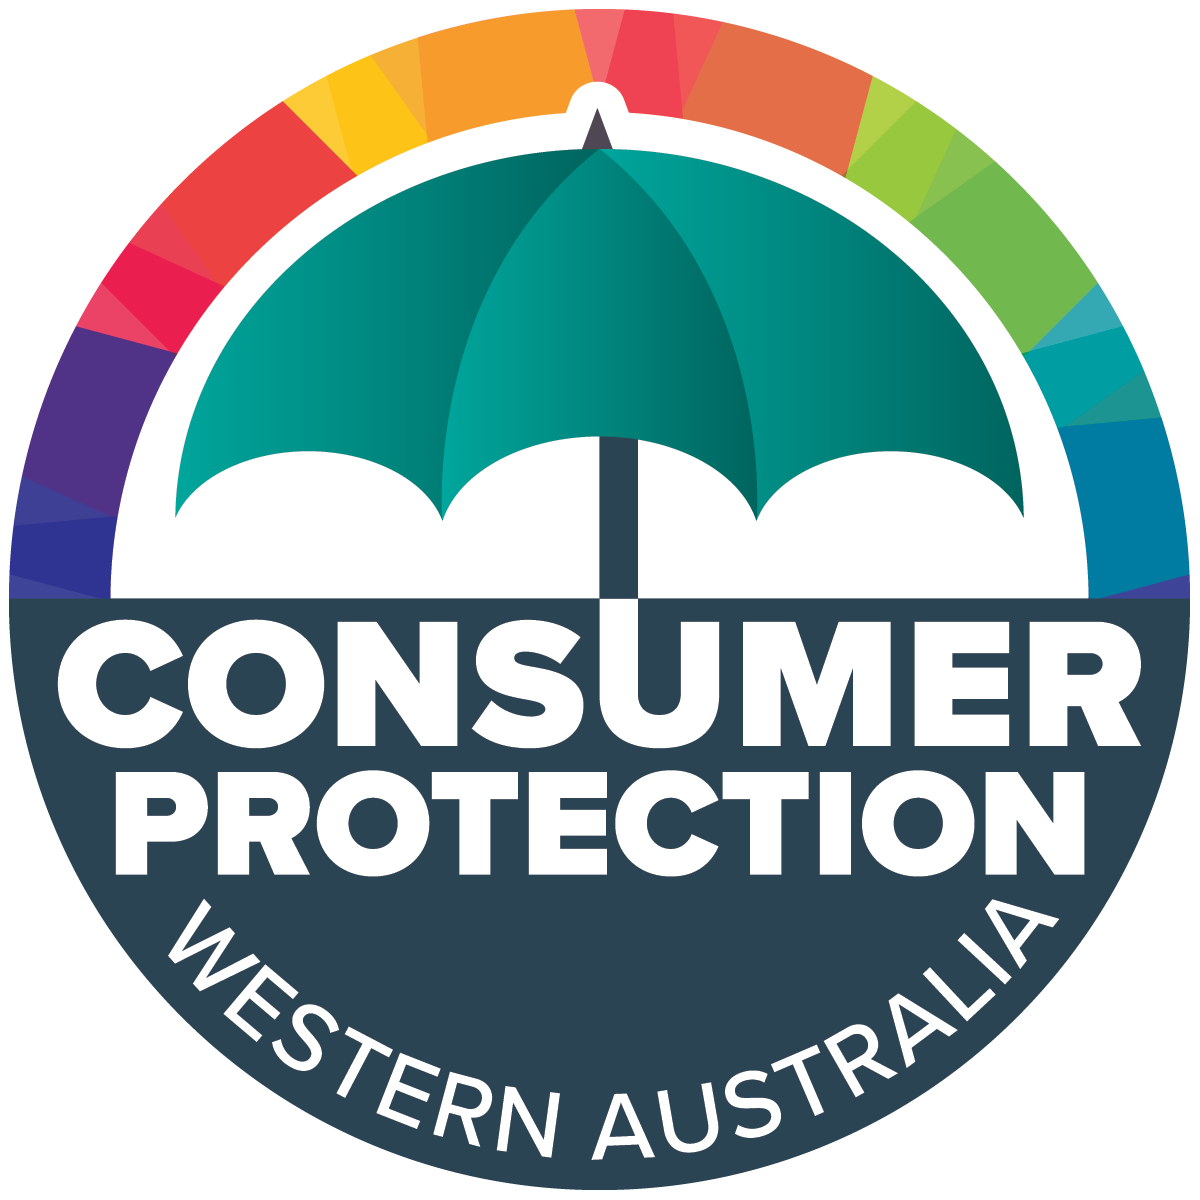 Consumer Protection logo.jpg